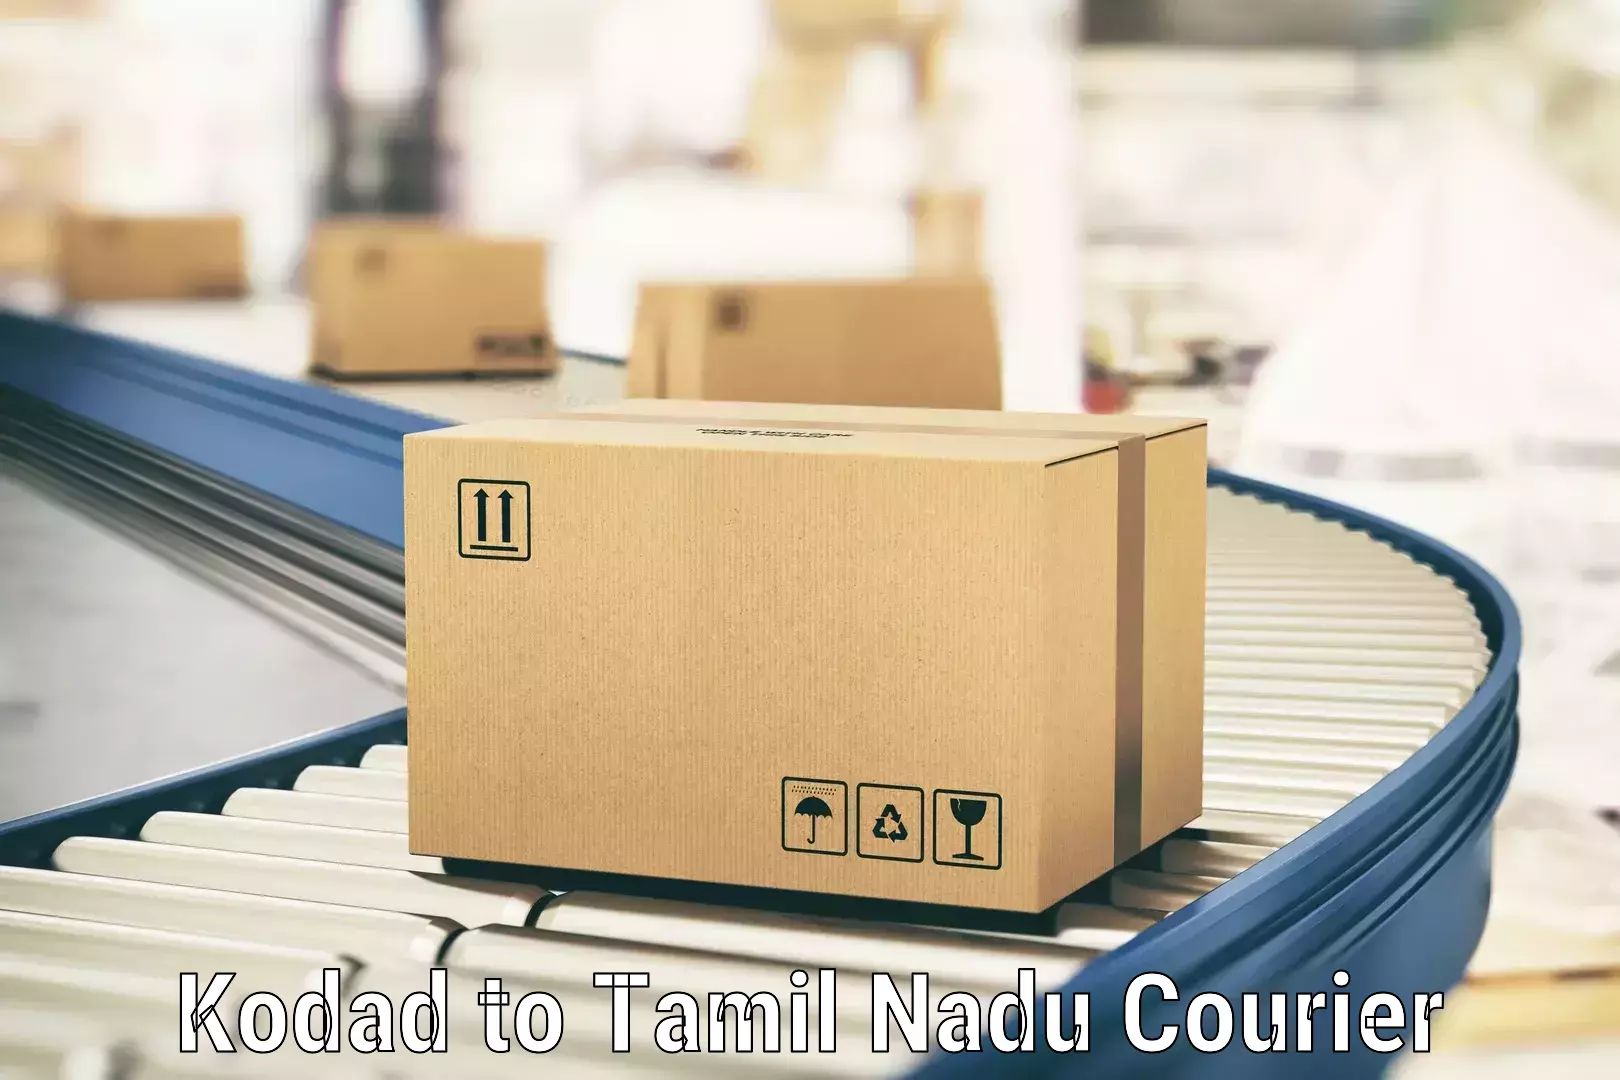 Fastest parcel delivery in Kodad to Kanchipuram